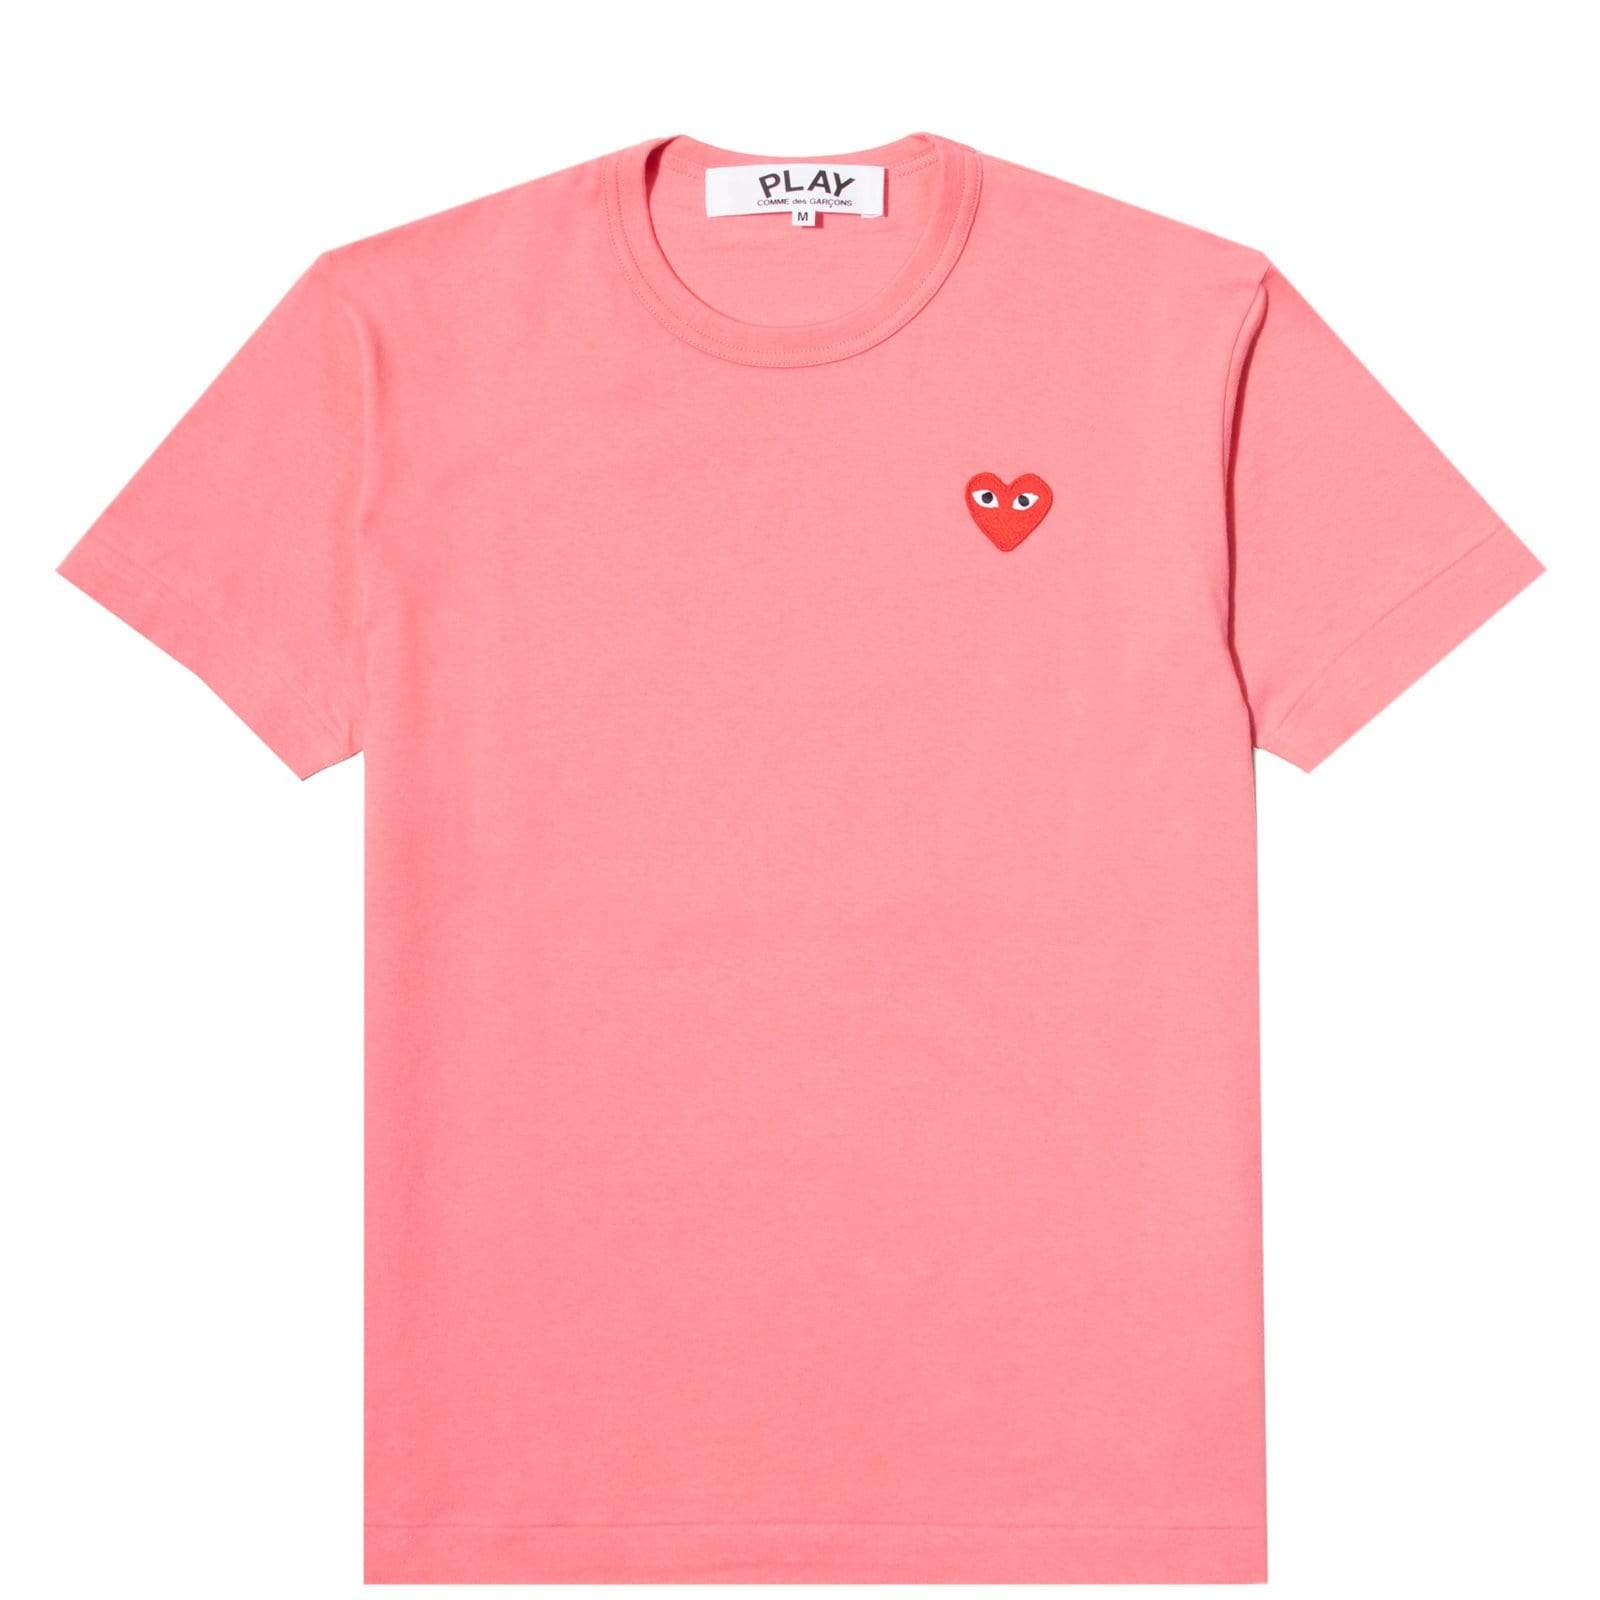 PLAY T-SHIRT Pink/Red Heart – Bodega